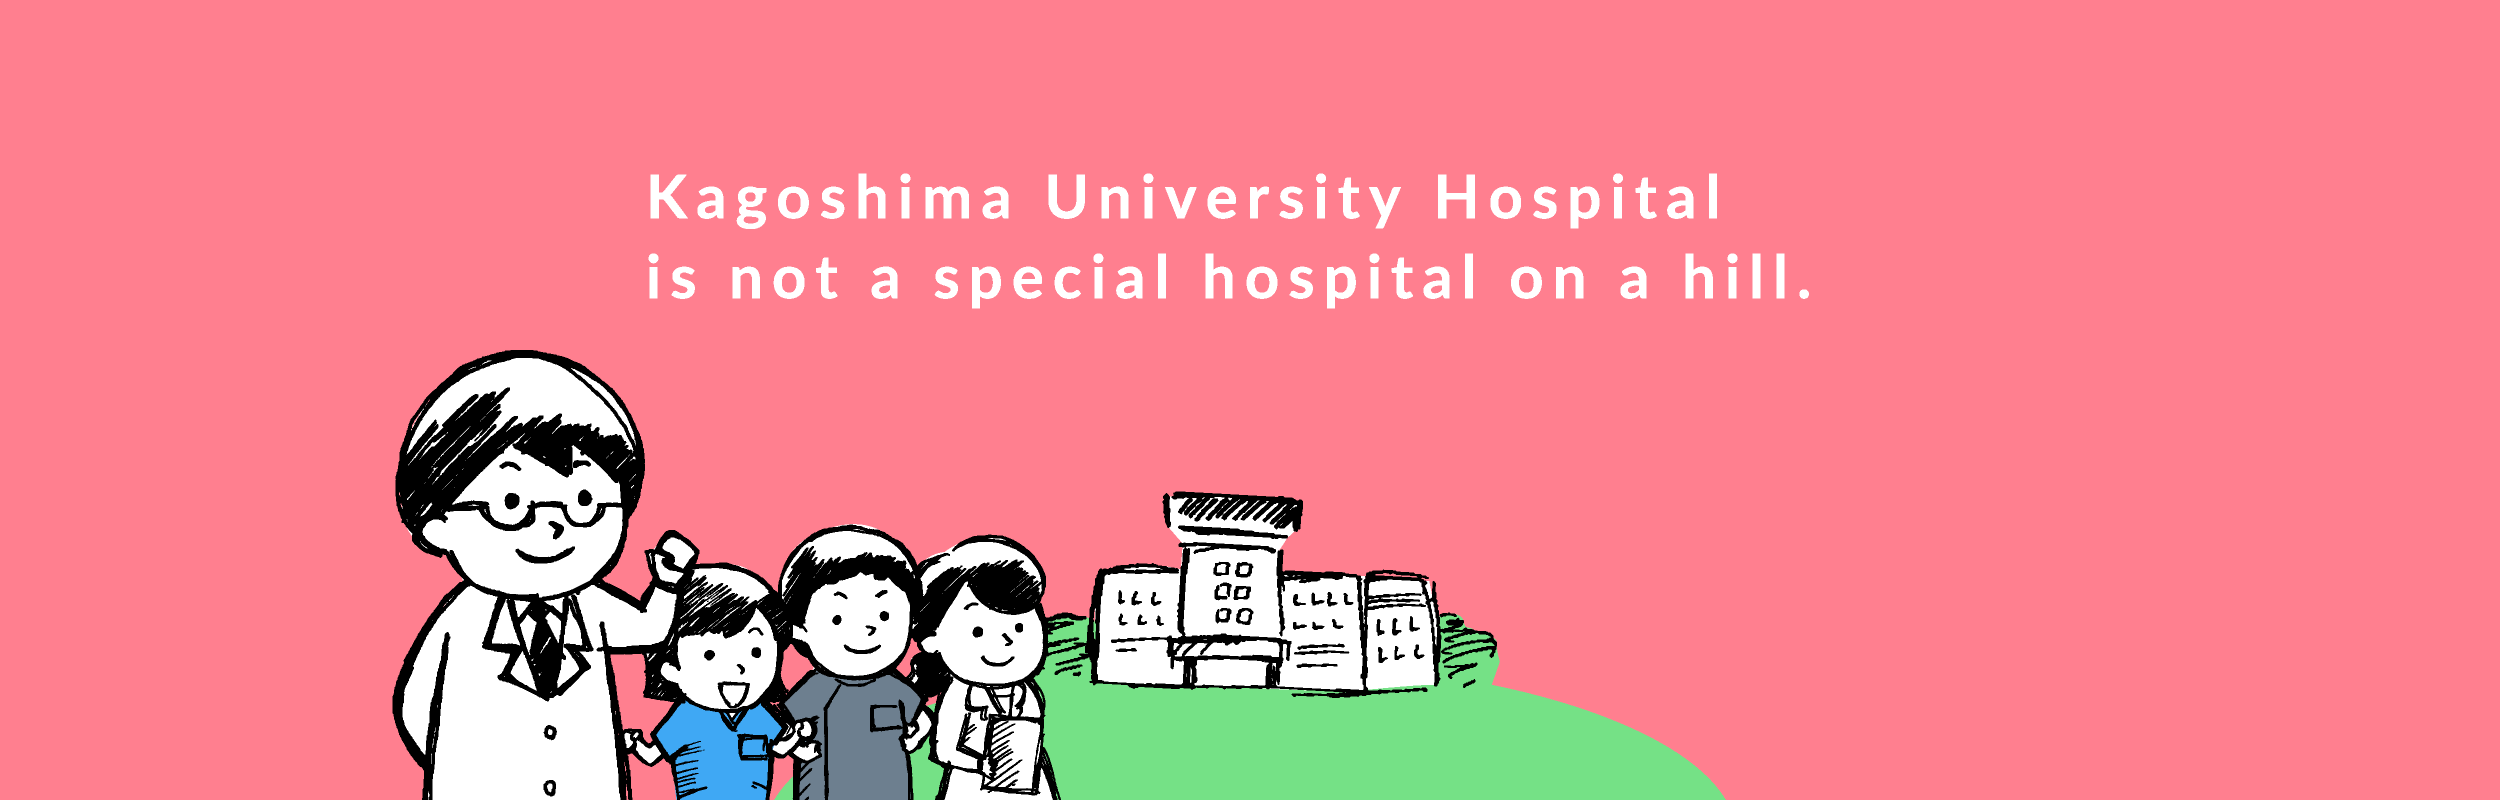 Kagoshima University Hospital is not a special hospital on a hill.